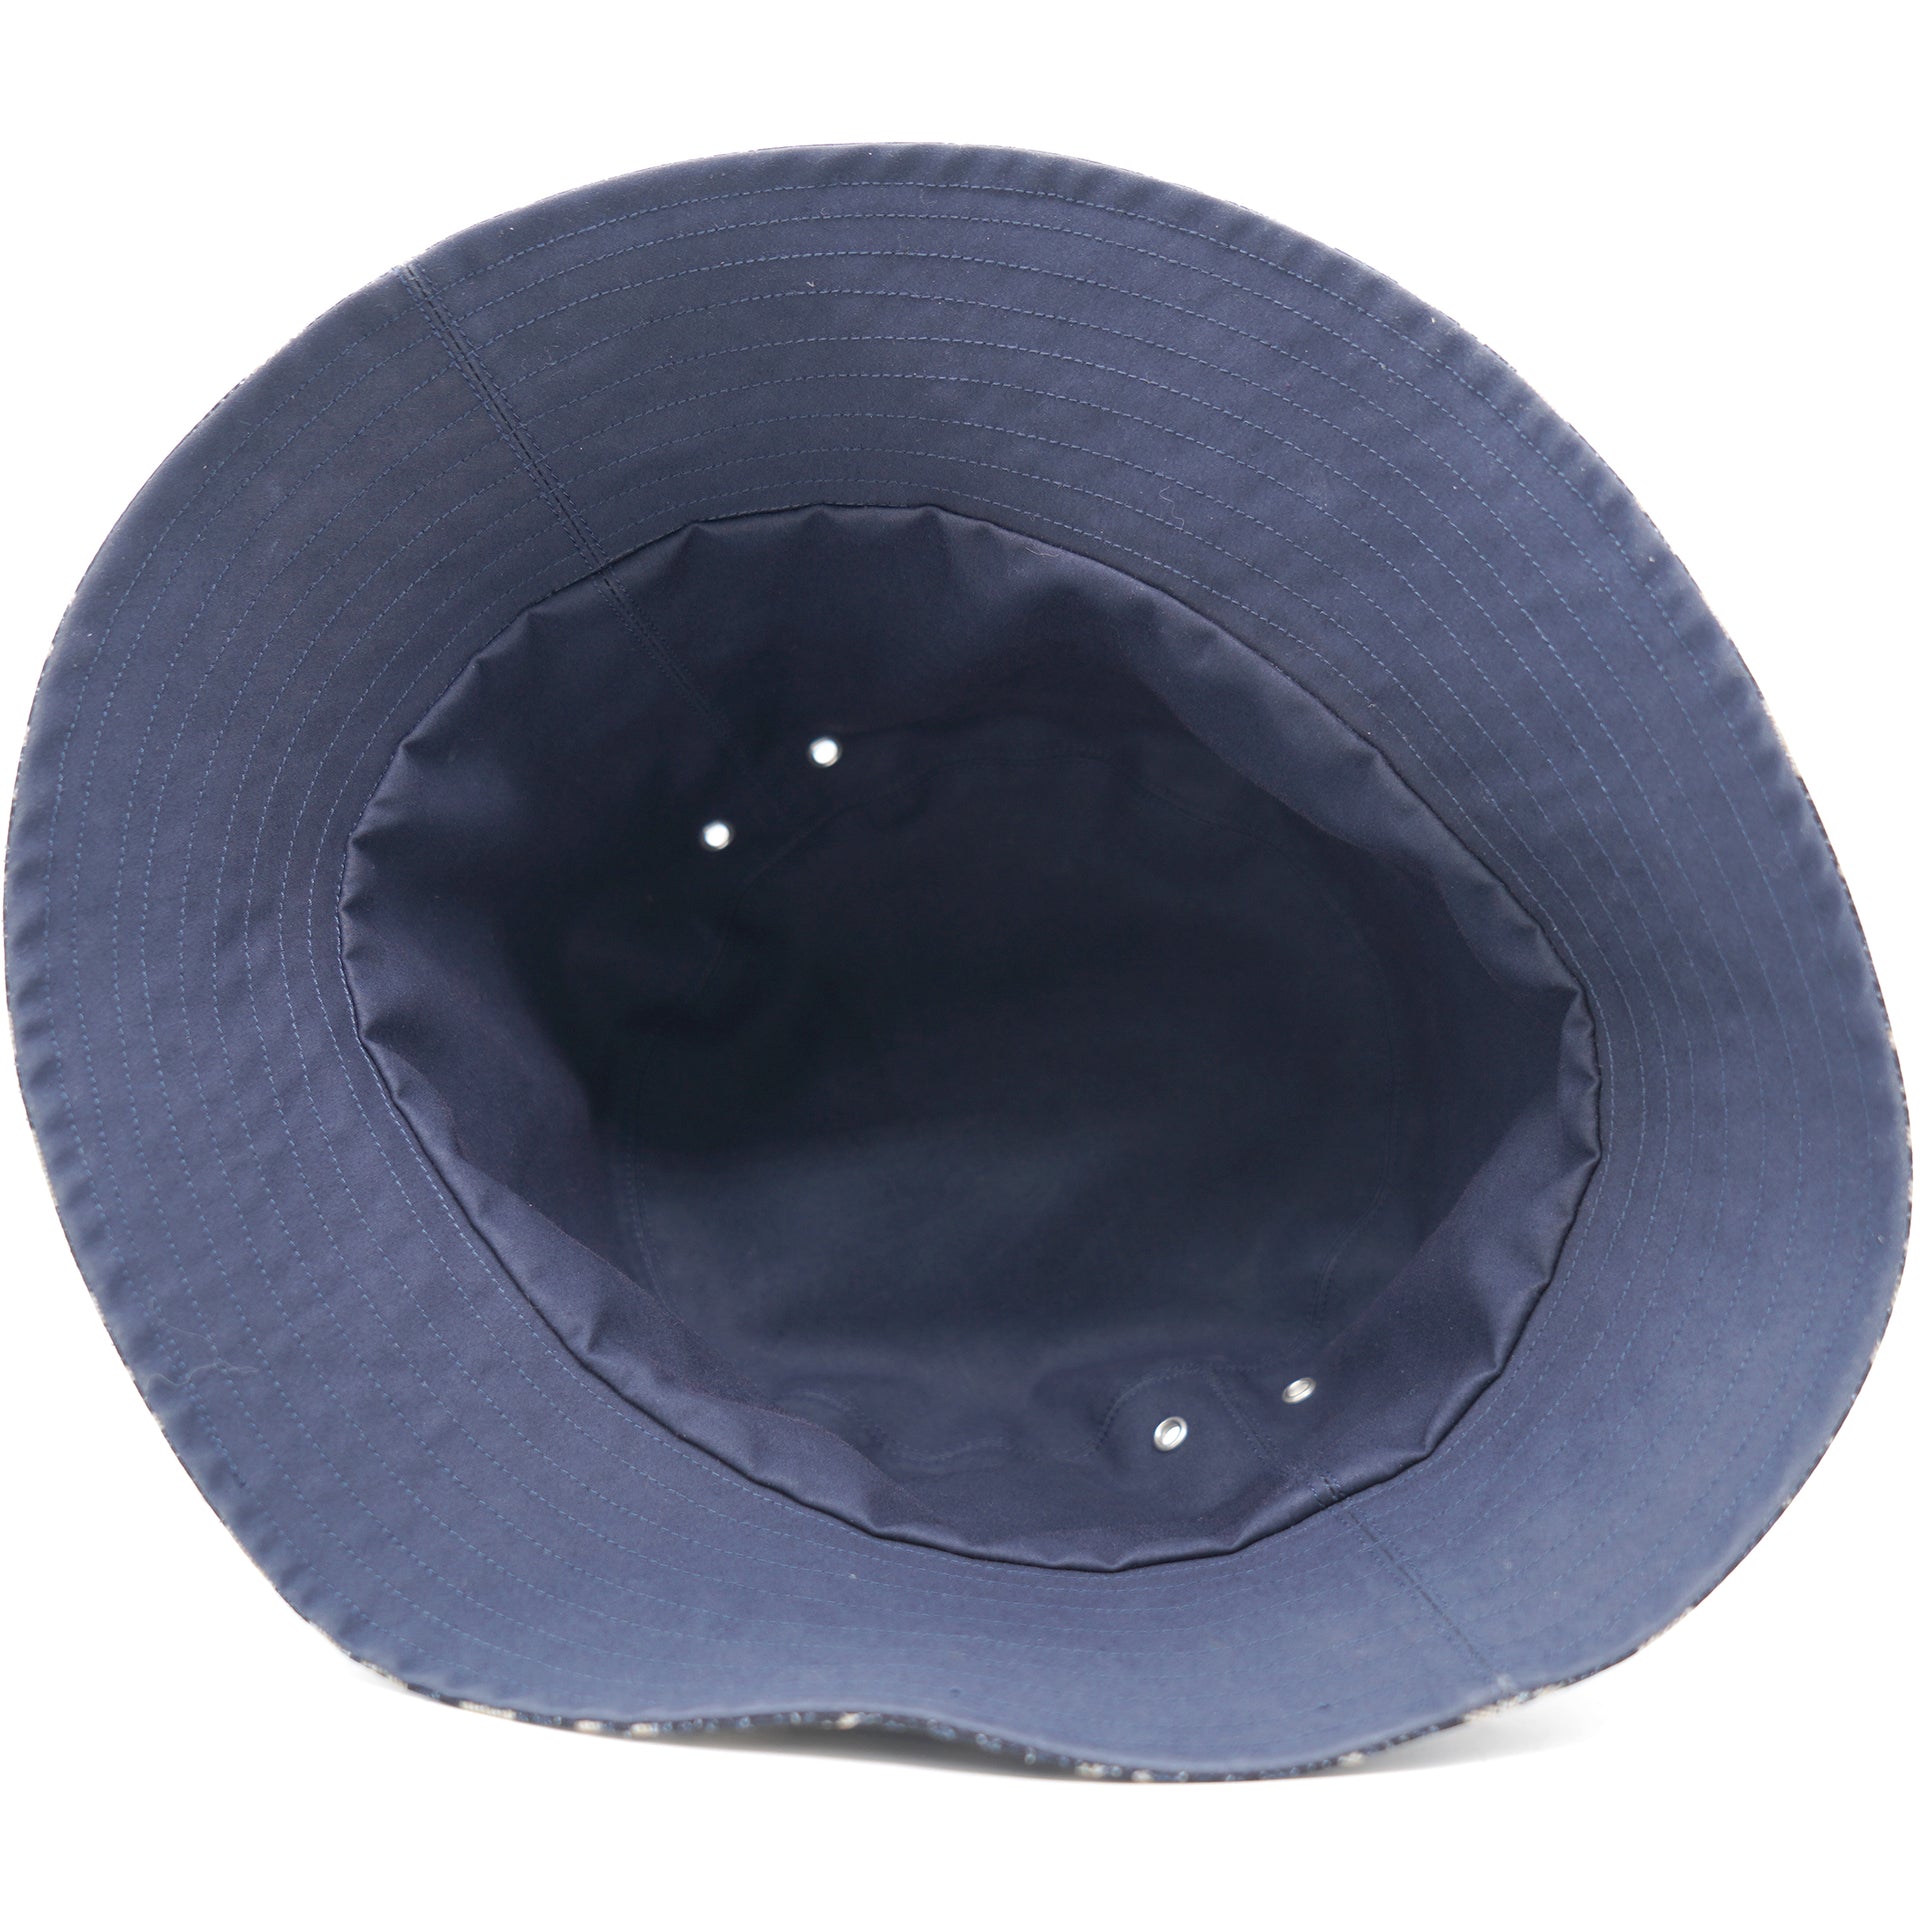 Oblique Reversible Teddy-D Brim Bucket Hat 58 Blue